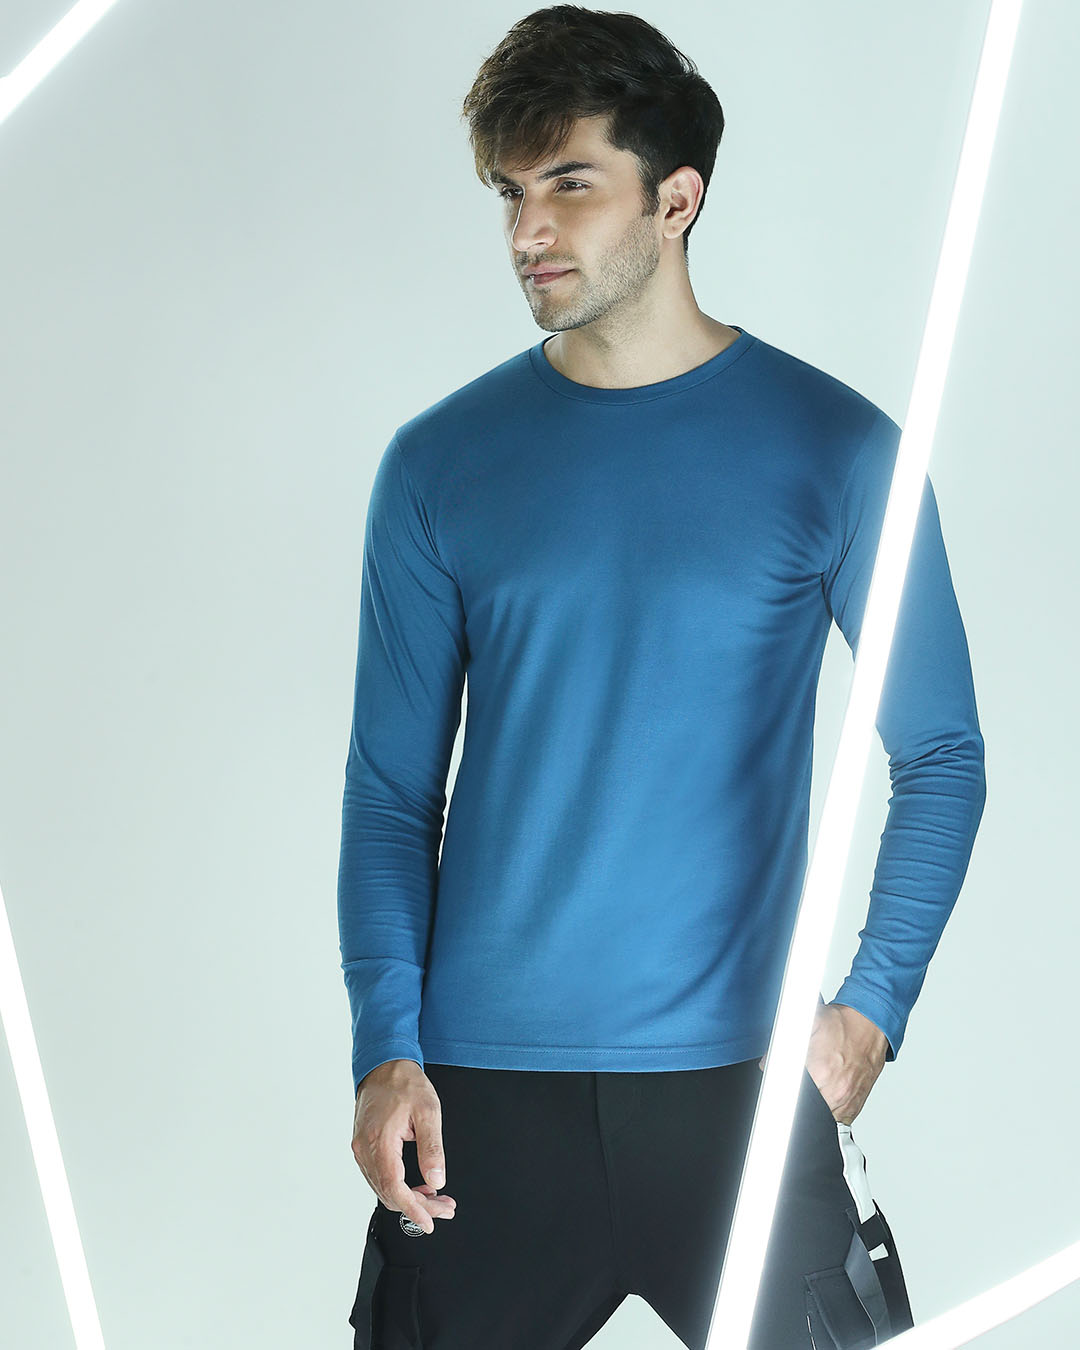 Buy Digi Teal Full Sleeve T-Shirt Plain For Men Online India @ Bewakoof.com